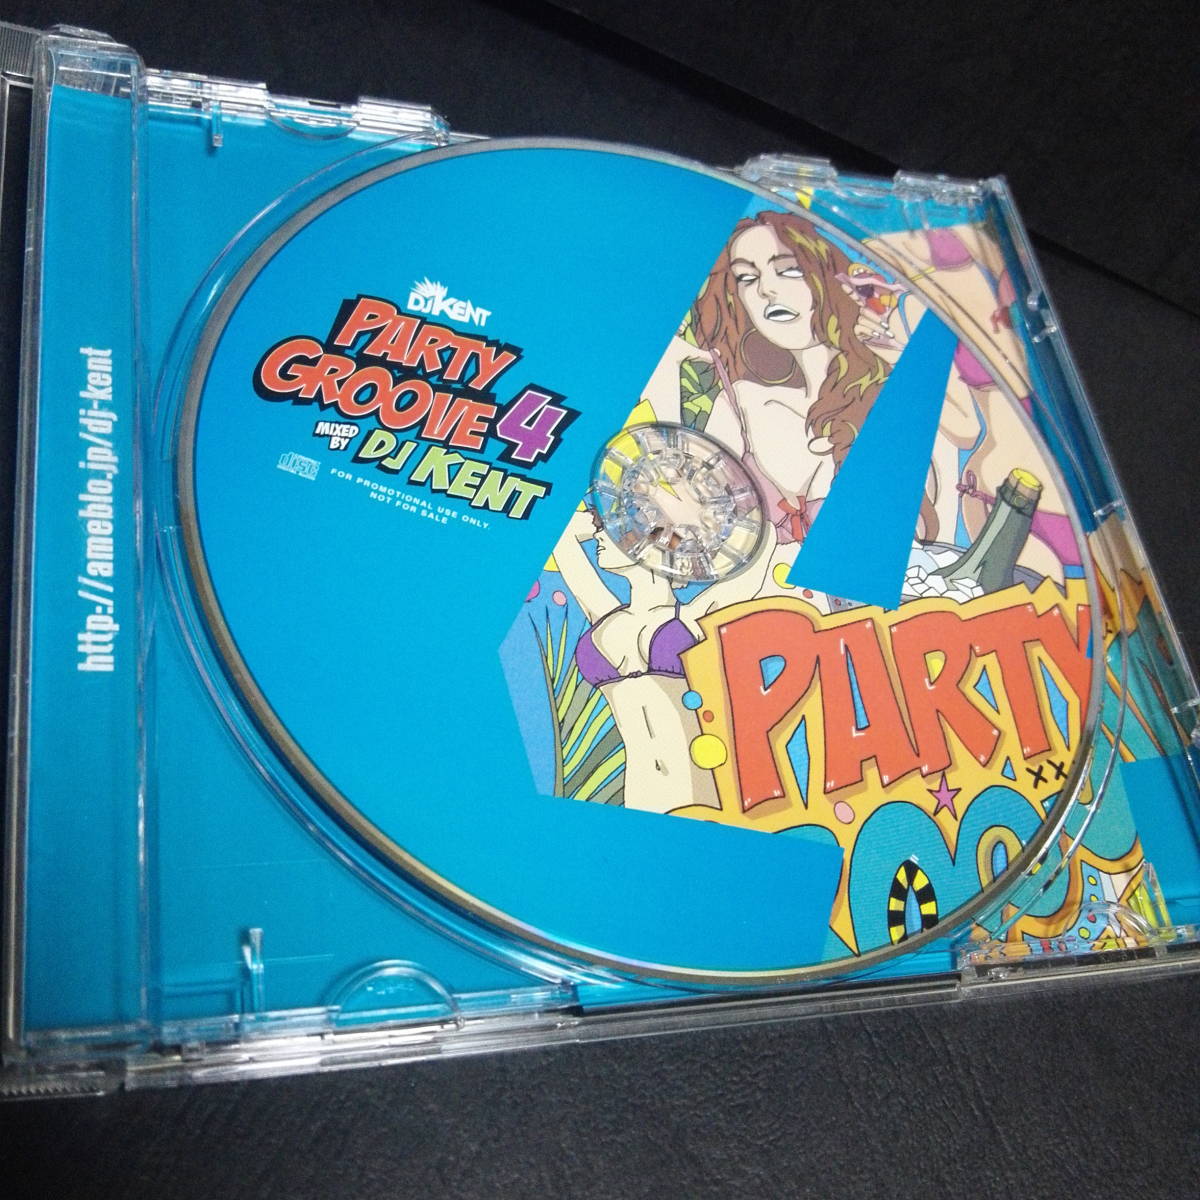 DJ KENT - PARTY GROOVE 4　全50曲収録 EDM オールジャンル パーティー PARTY MIX Pitbull LMFAO Pink David Guetta Lady Gaga HIPHOP R&B _画像9